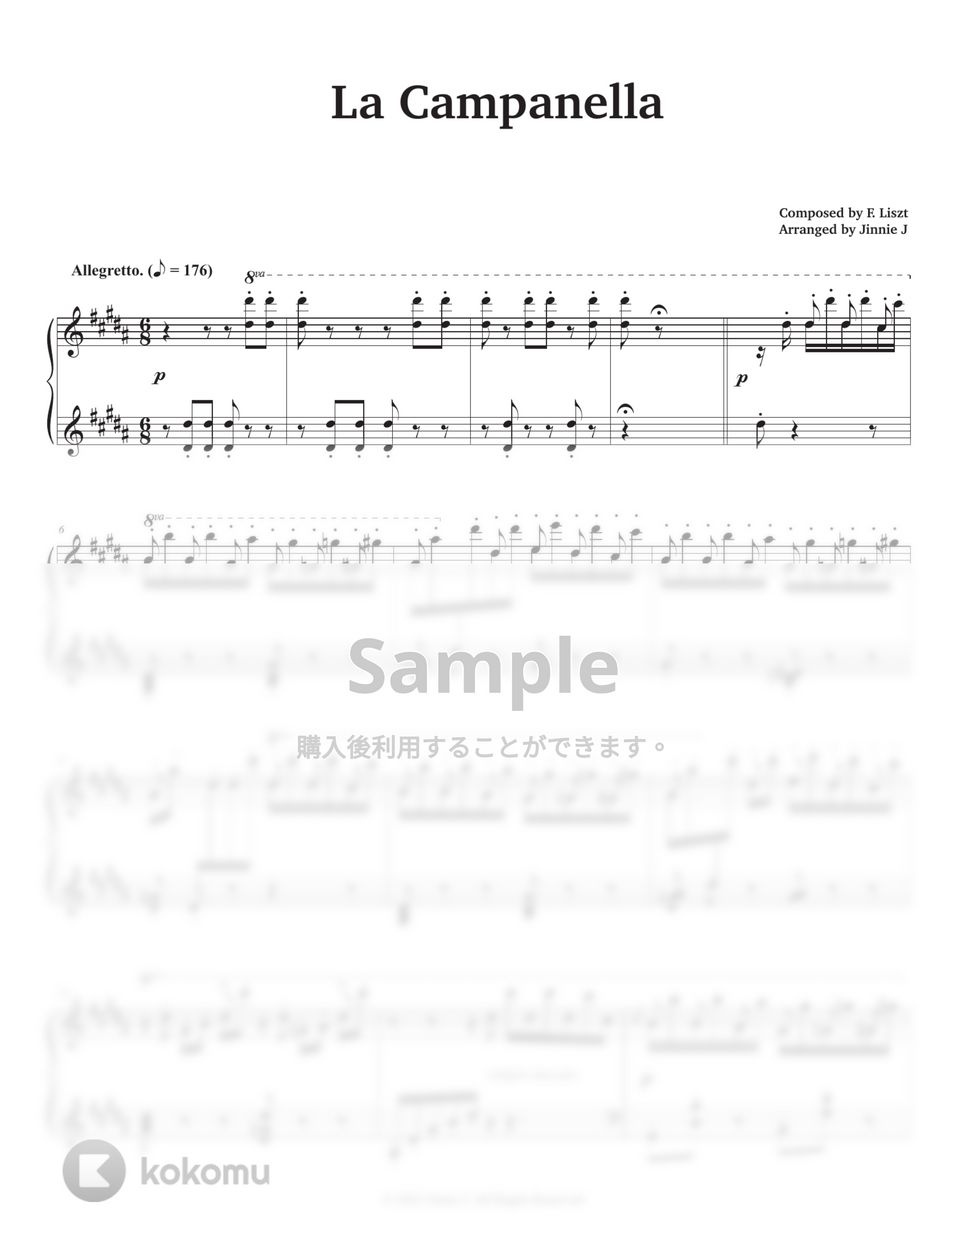 F. Liszt - La Campanella (中間レベル, G#m key) by Jinnie J